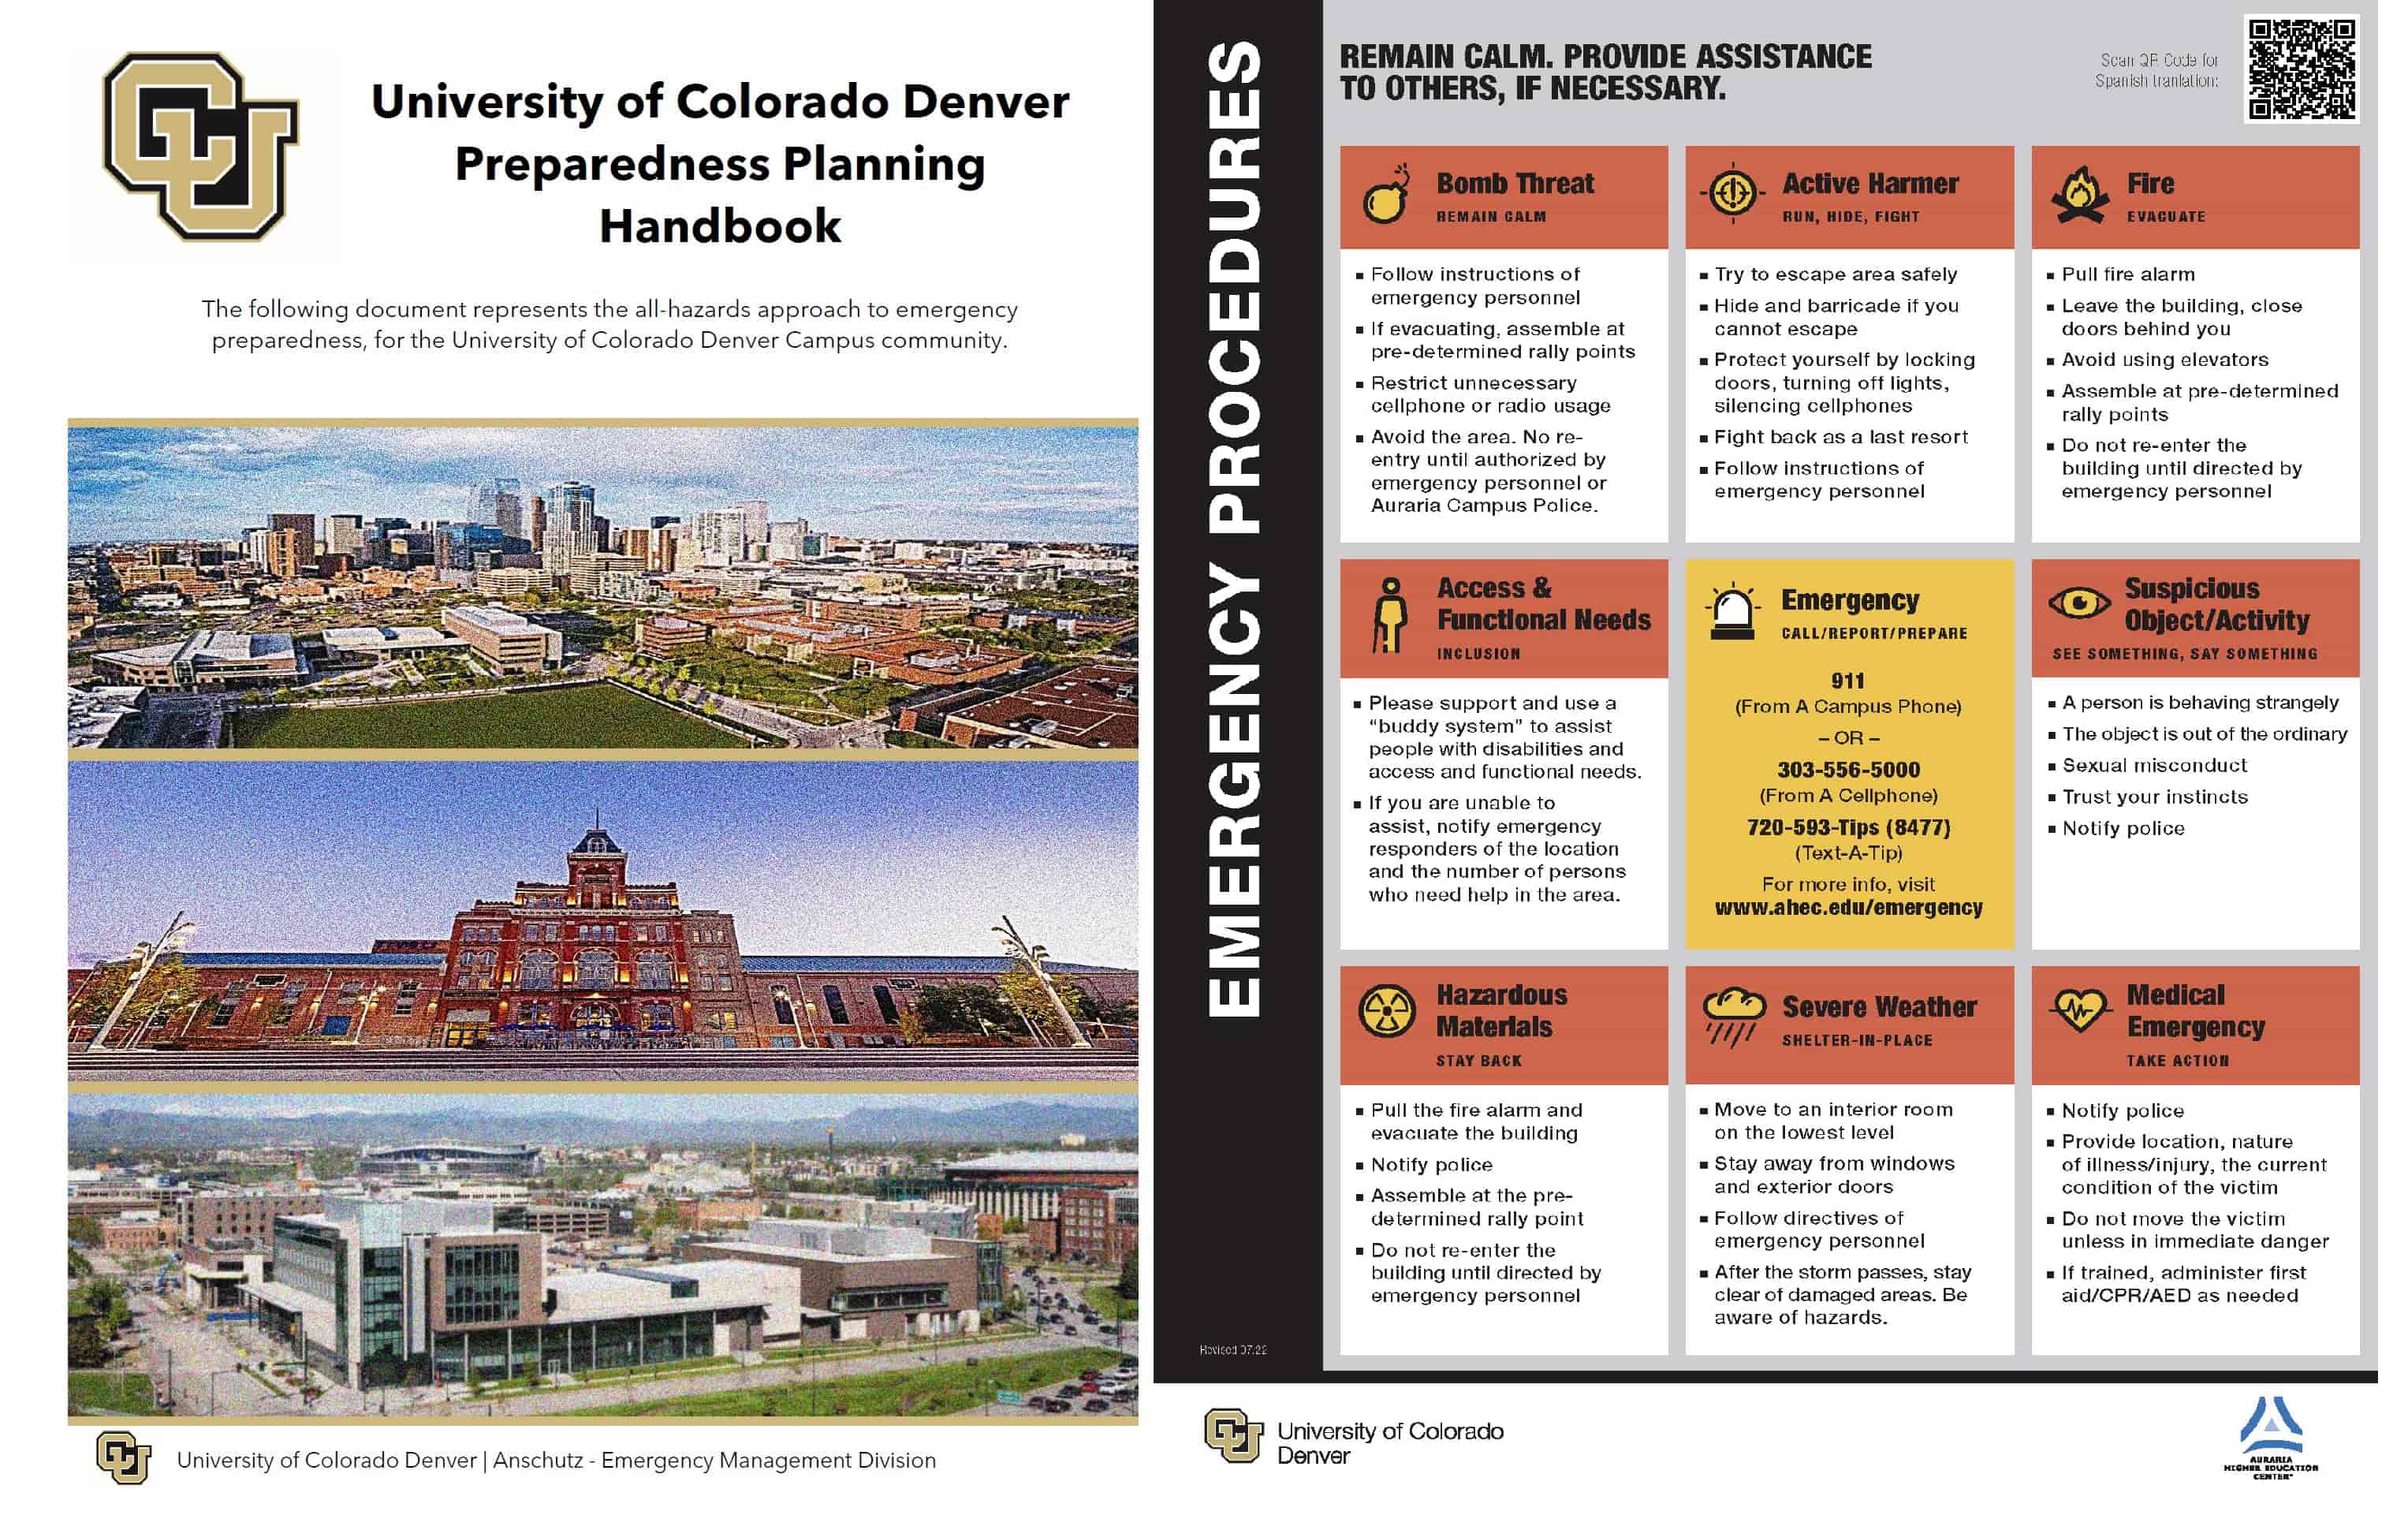 CU Denver EM Website Guides and Plans Image